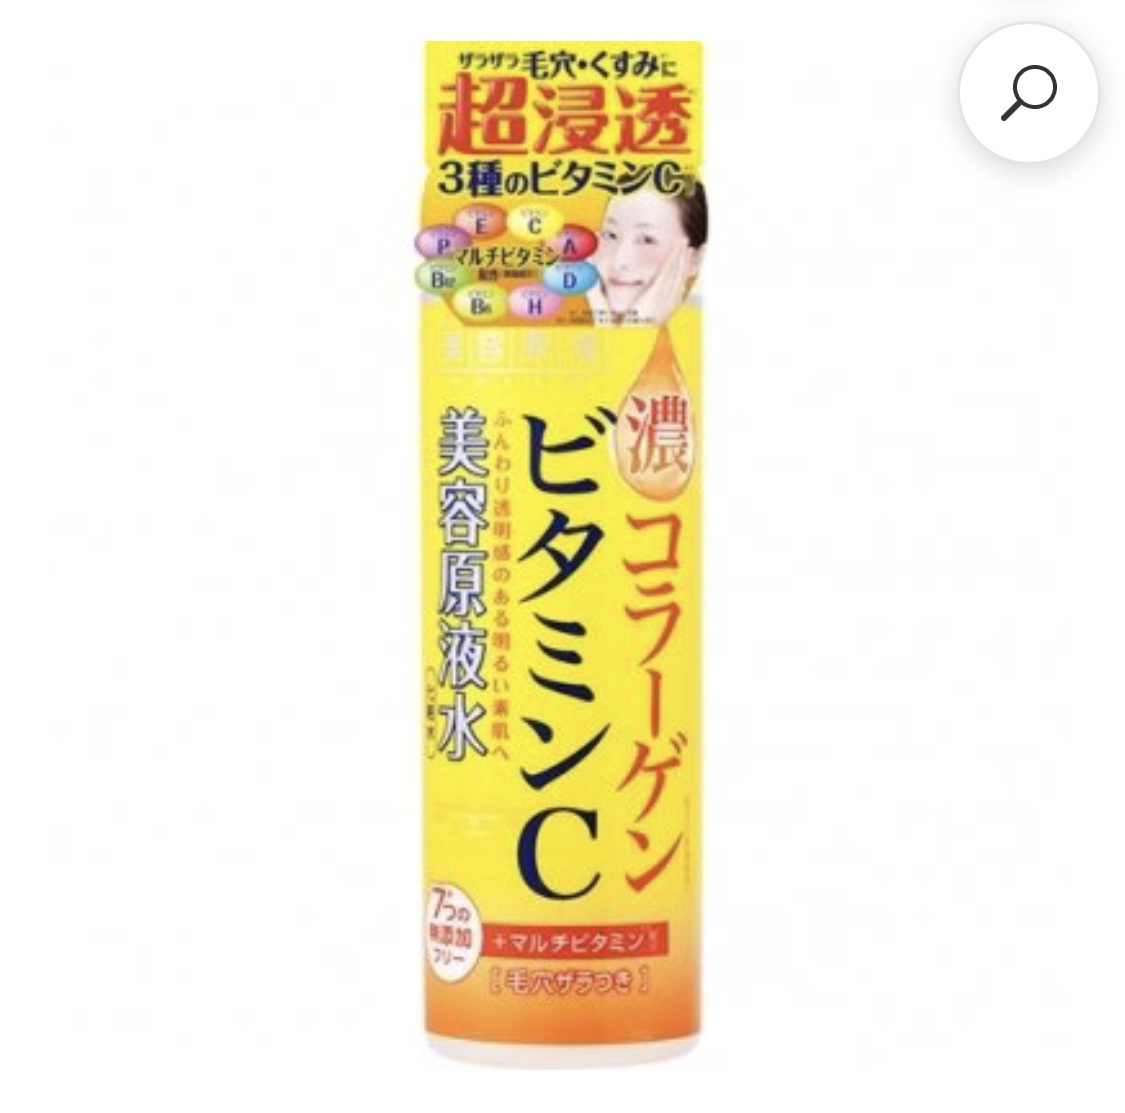 Cosmetex Ultra-Jun Beauty Stock Solution Vitamin C + Collagen Lotion